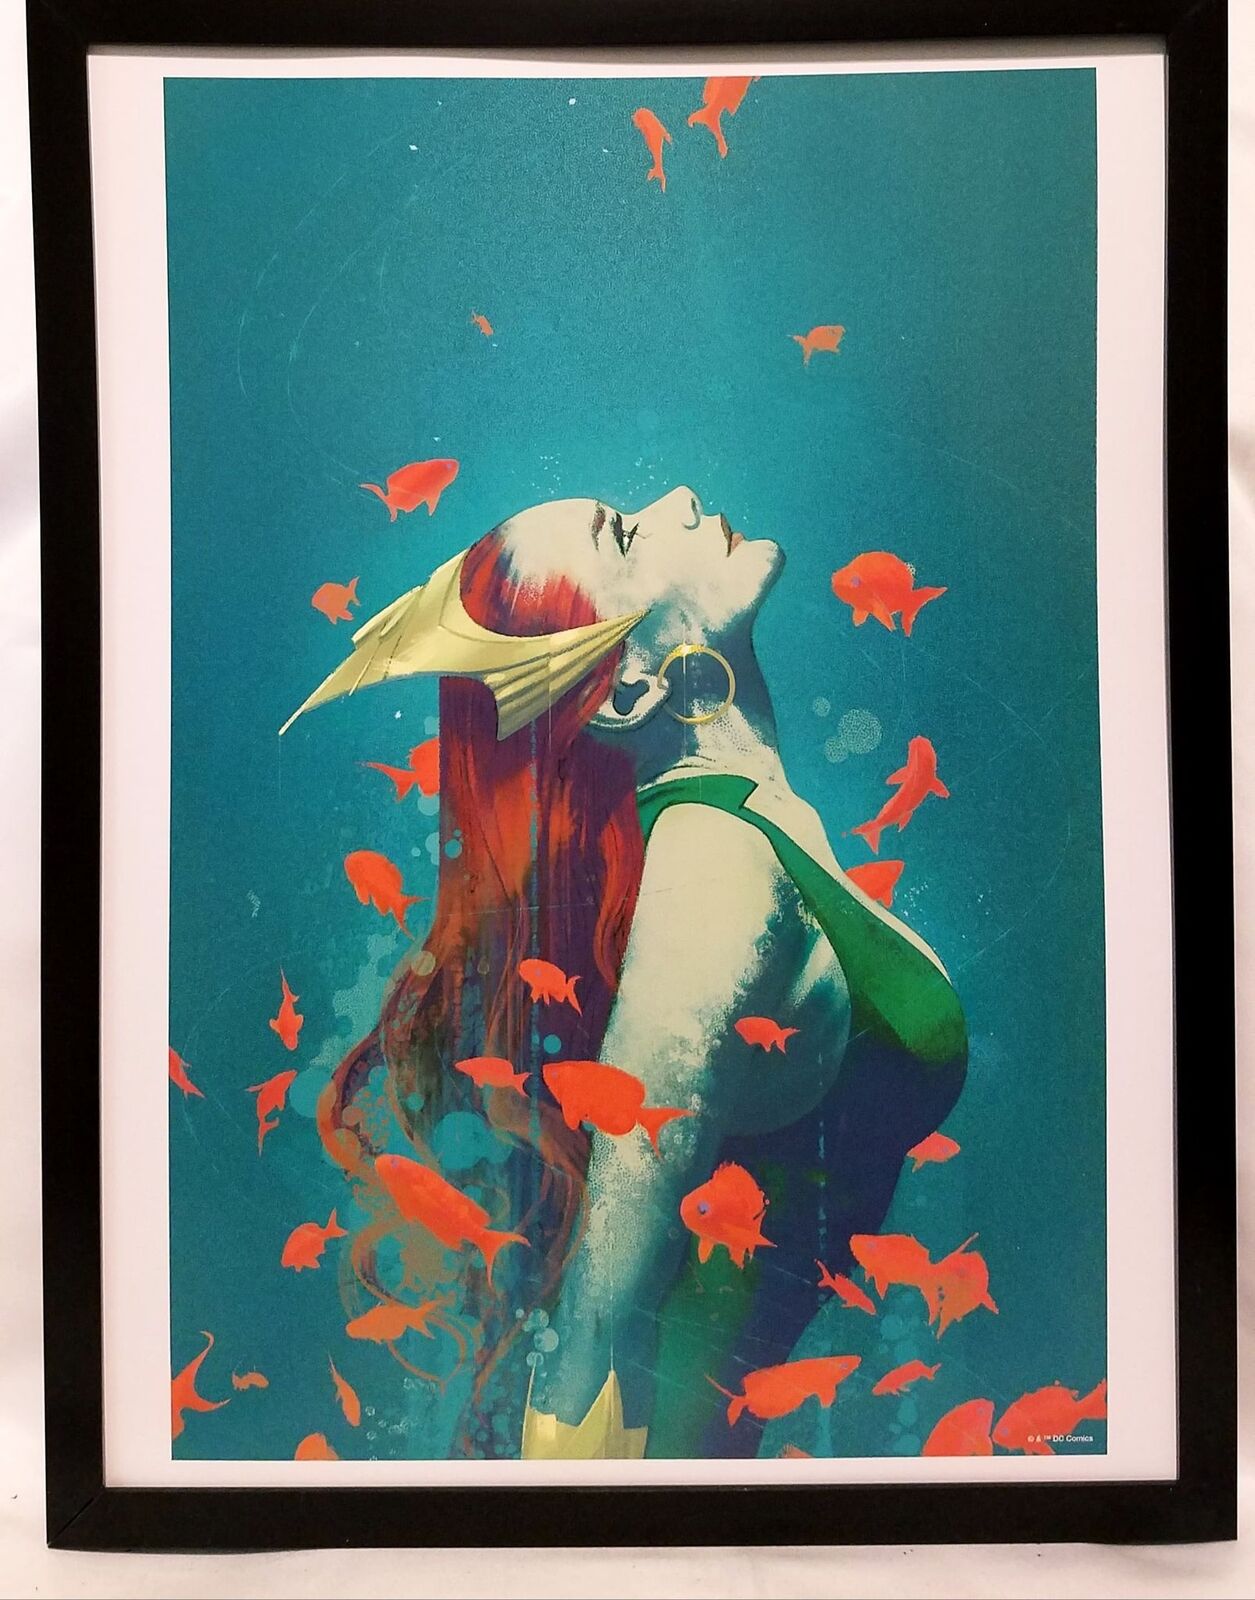 Mera (from Aquaman) by Joshua Middleton FRAMED 12x16 Art Print Poster DC Comics